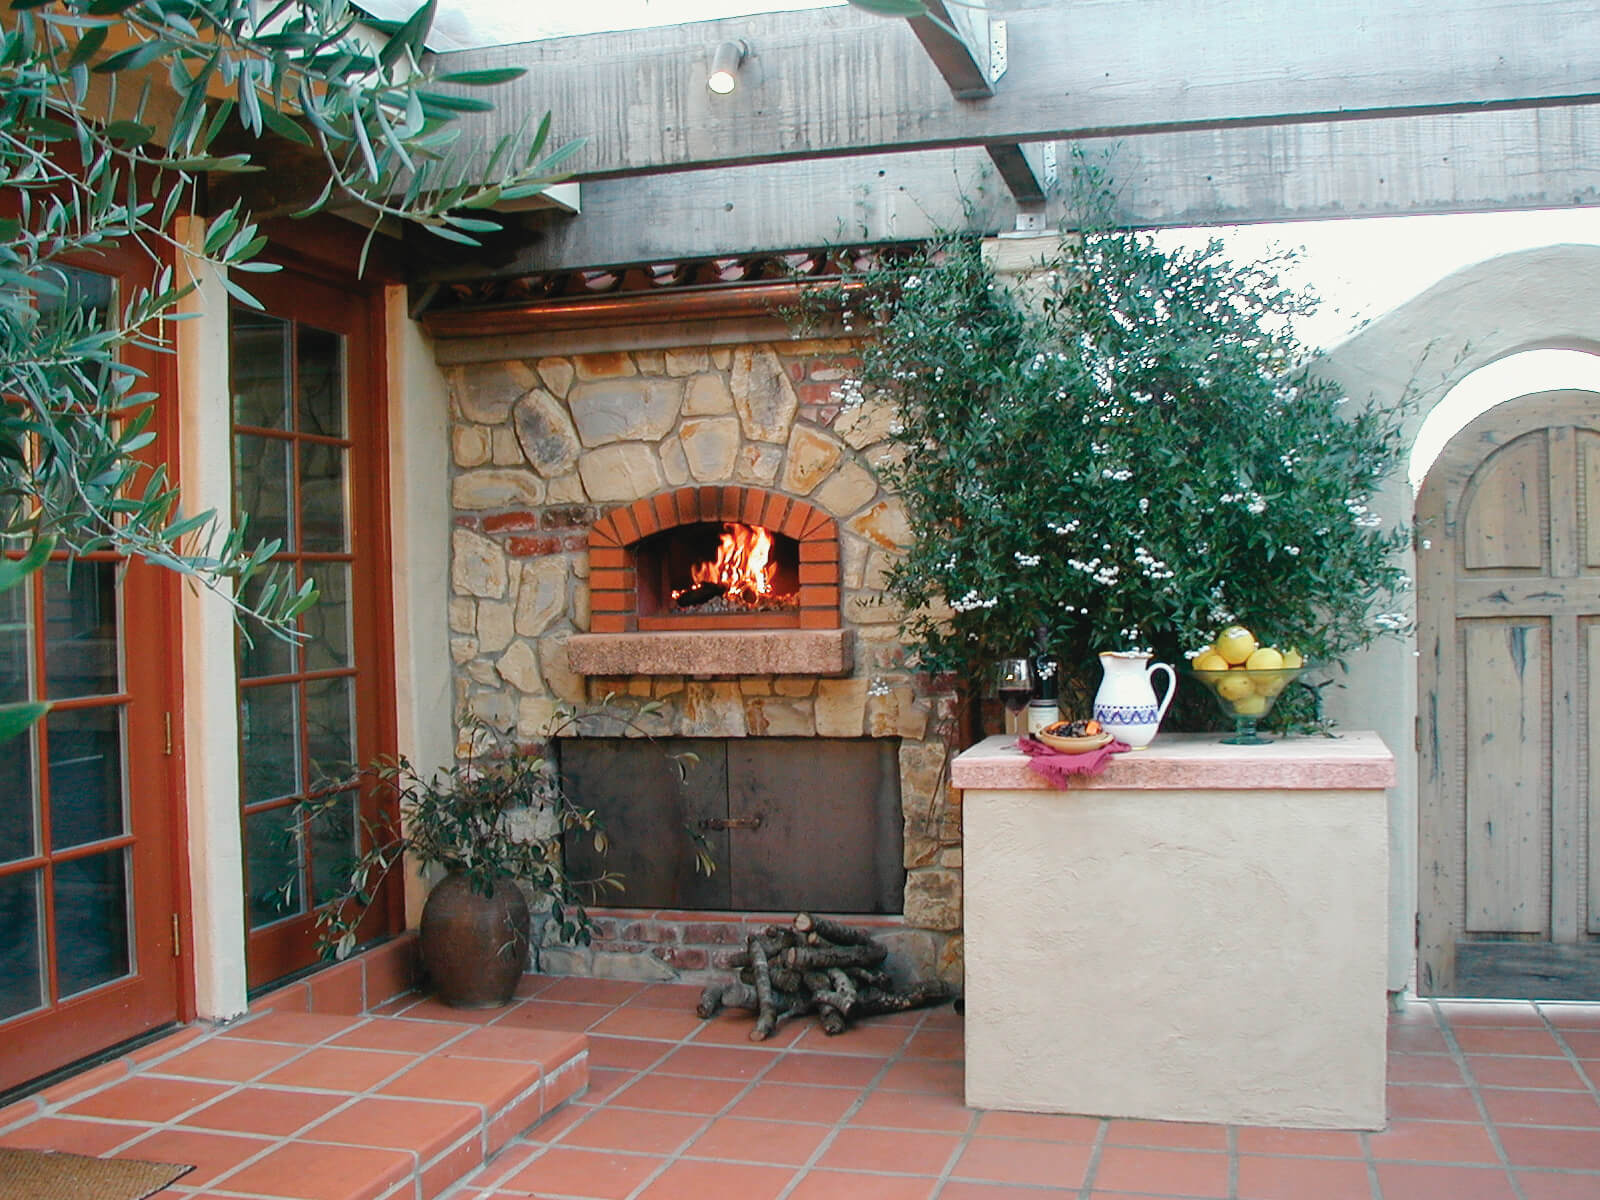 Mugnaini oven in an outdoor setting